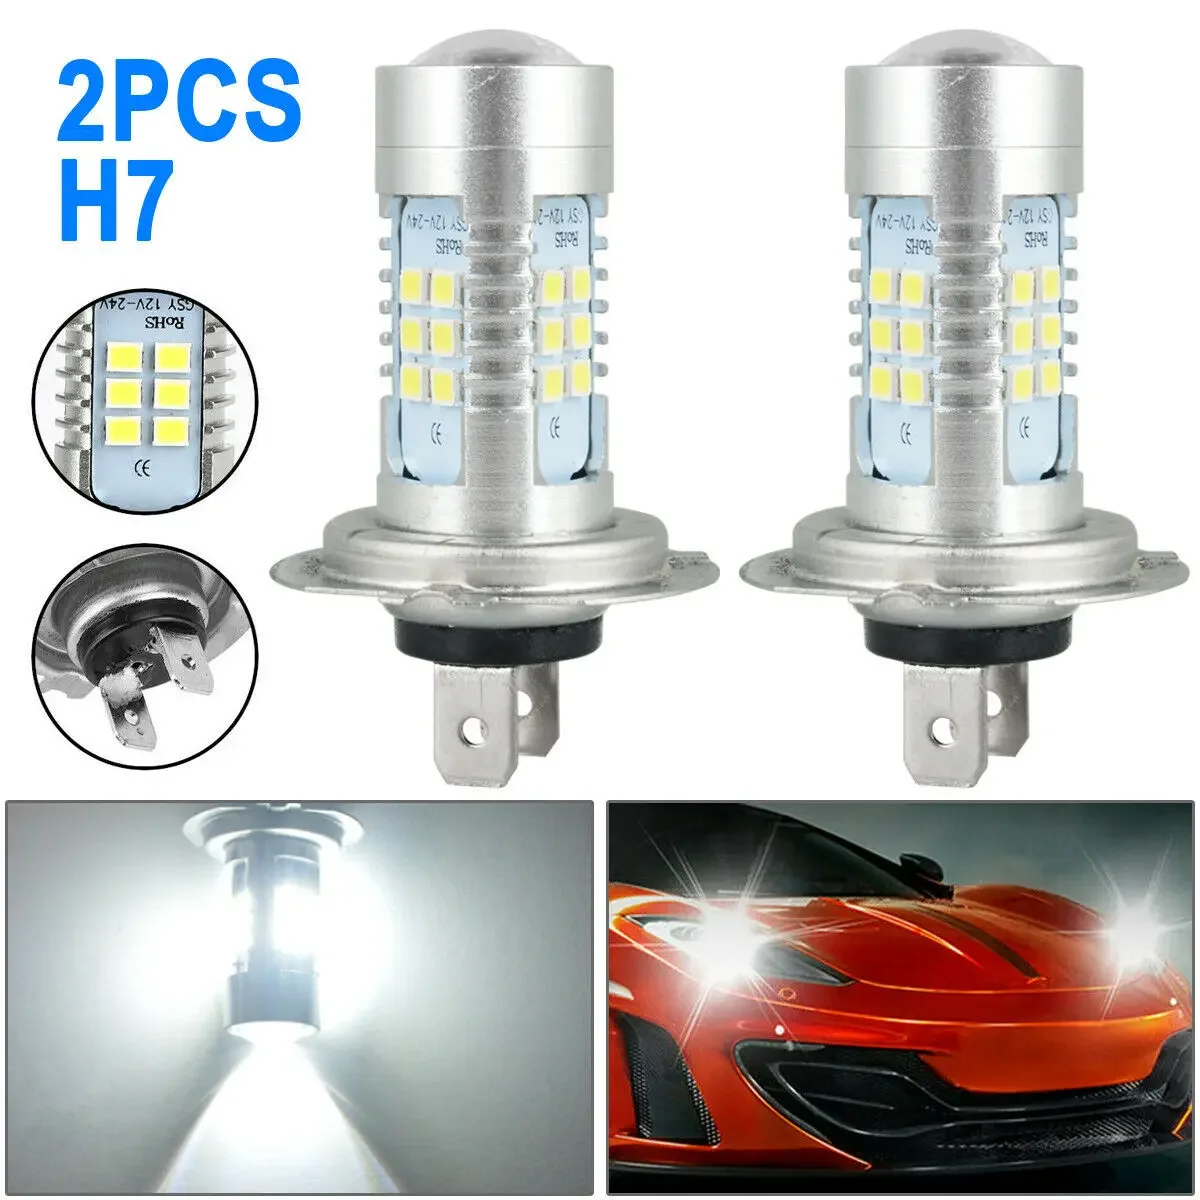 

2 PCS H7 H4 LED Headlight Bulbs High Low Beam 6000K Super White Lights Car Fog Lights Auto DRL Cob Chips 12V 24V 110W